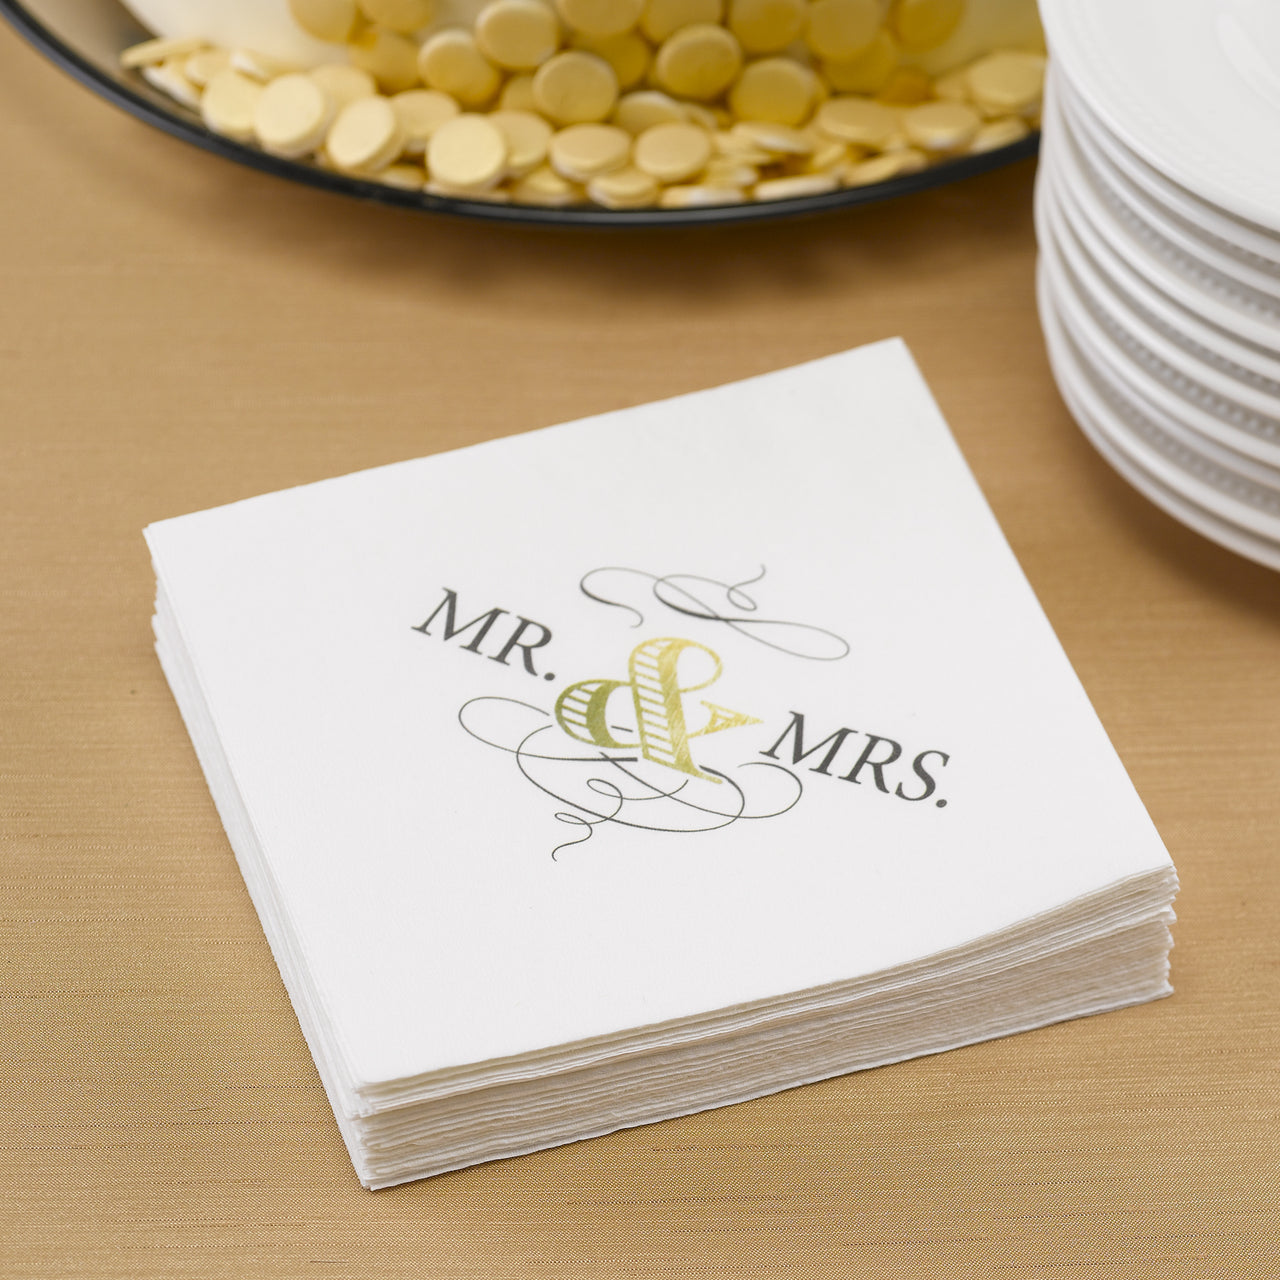 Mr. & Mrs. Classic Beverage Napkins (Set of 50) - Alternate Image 2 | My Wedding Favors